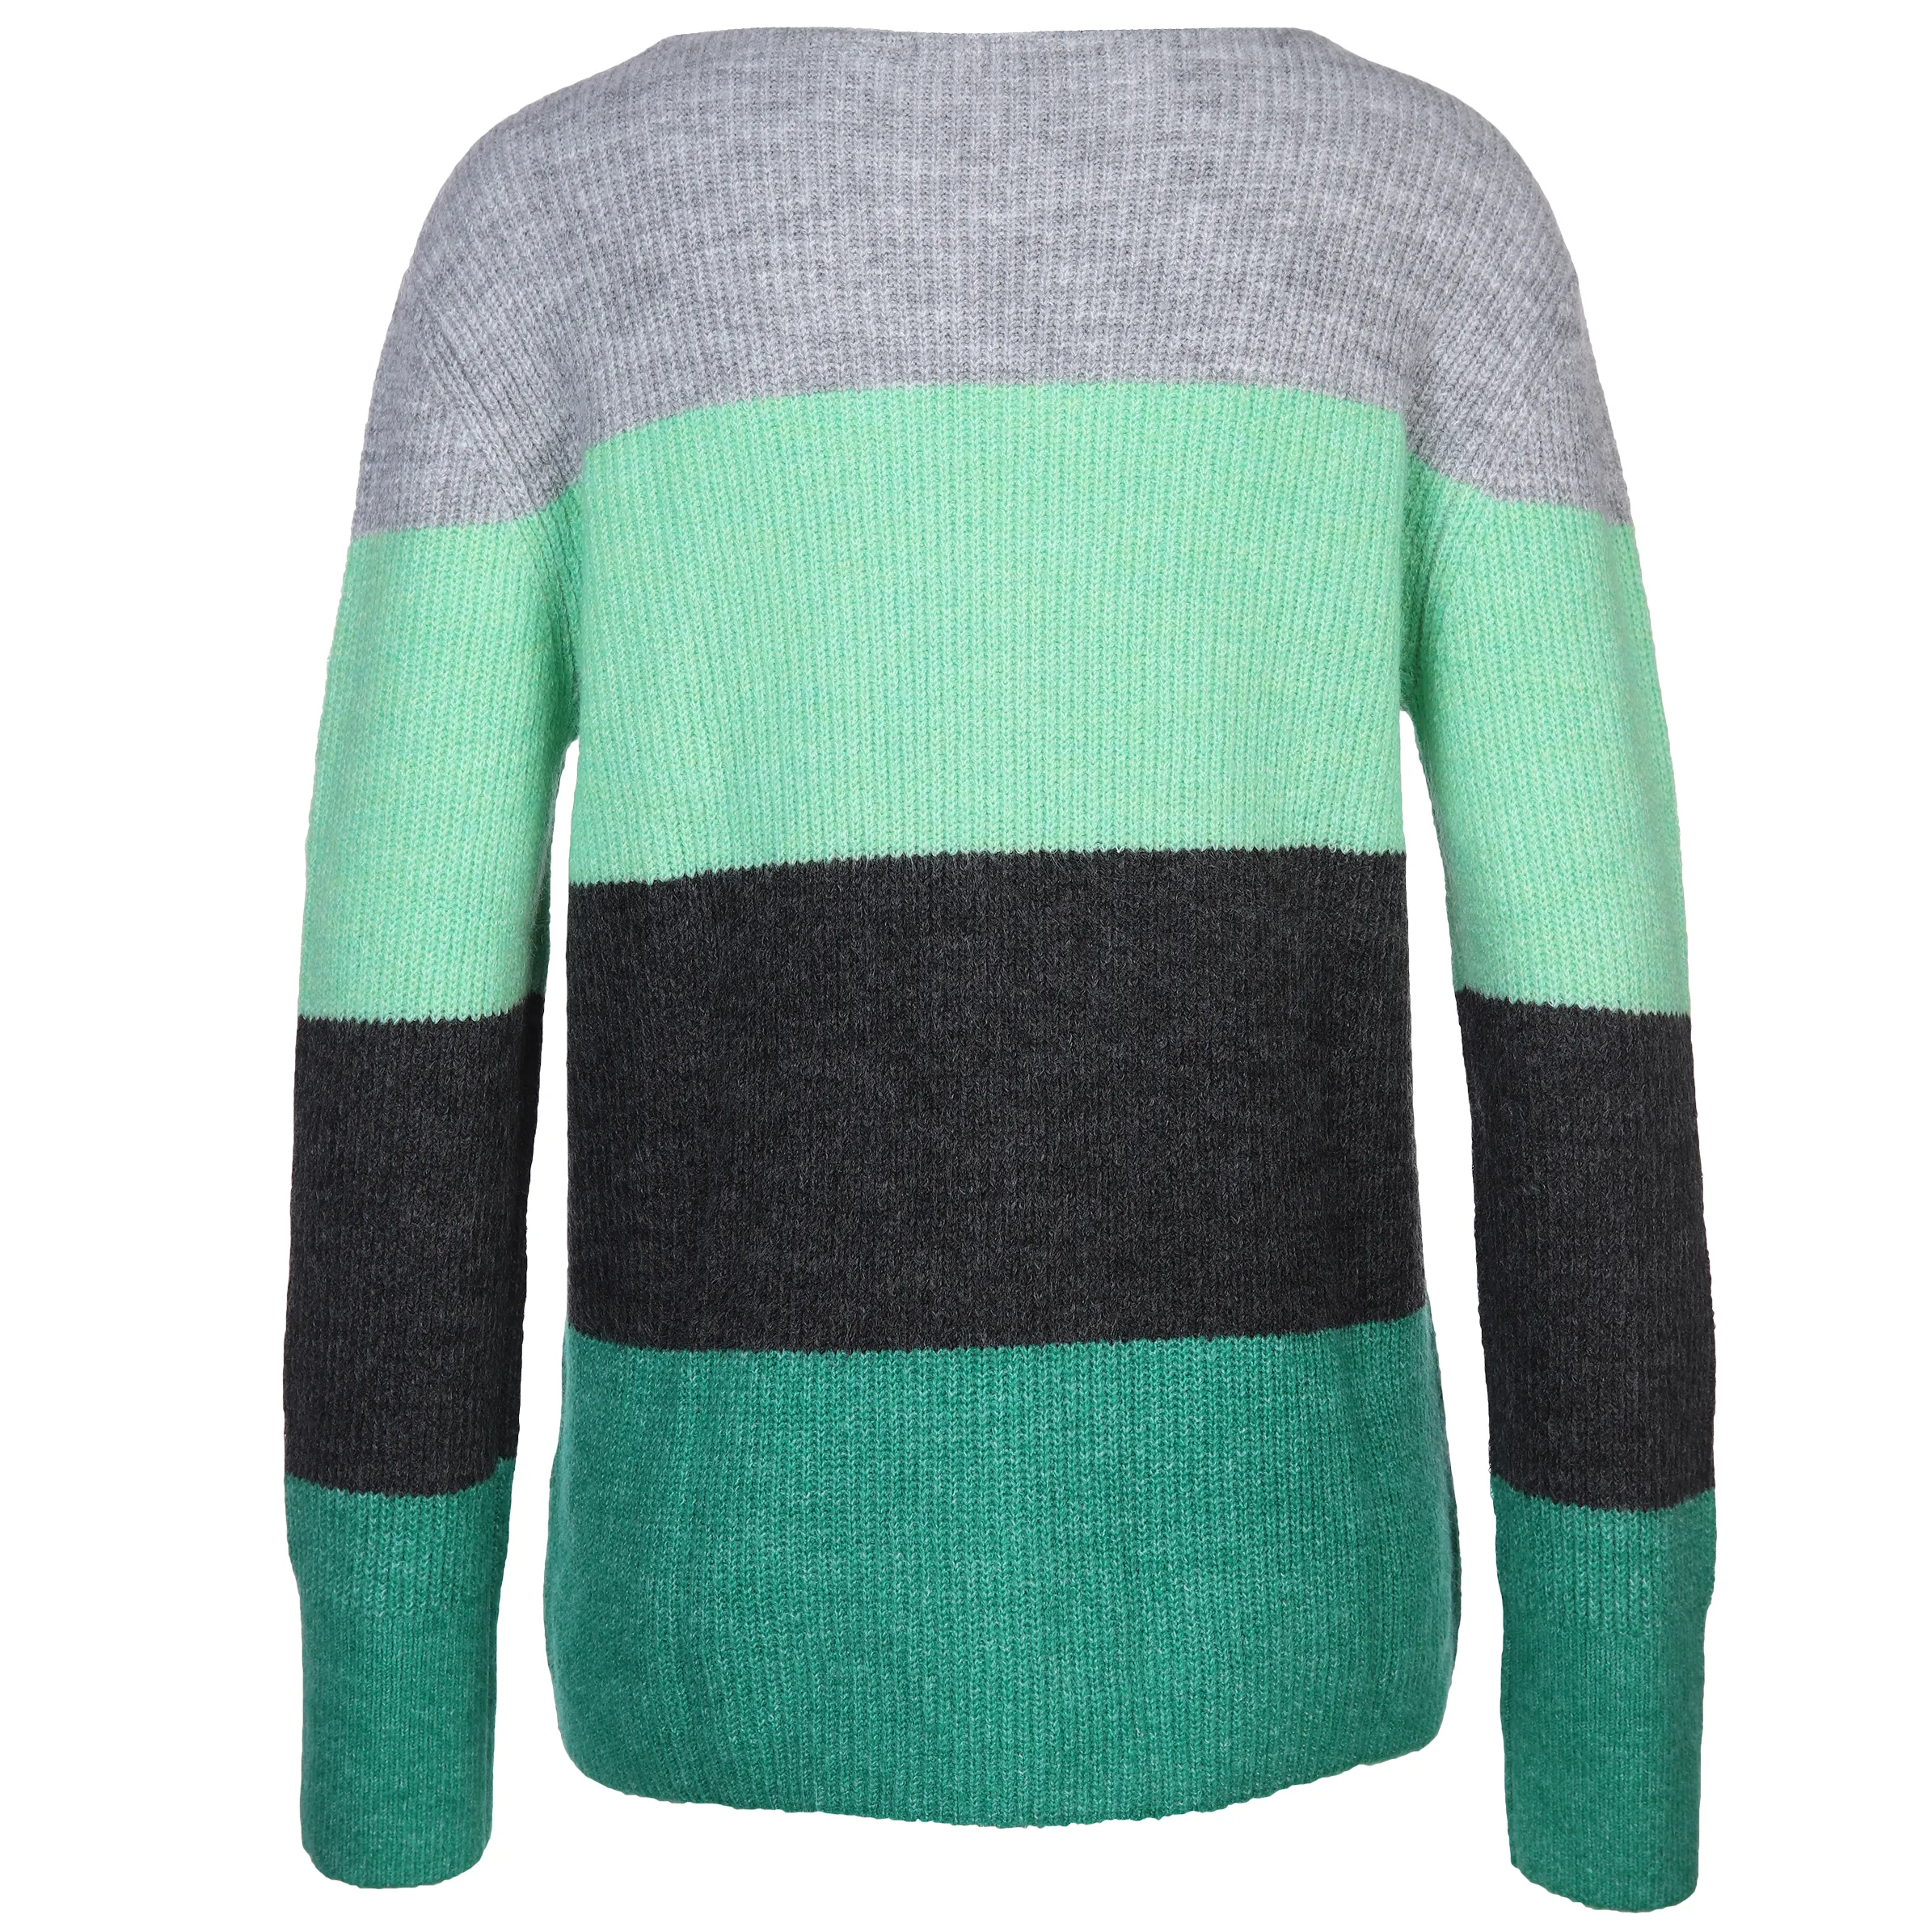 Damen Pullover | GRÜN/GRAU color | Style blocking im 880926-gruengrau noSize 